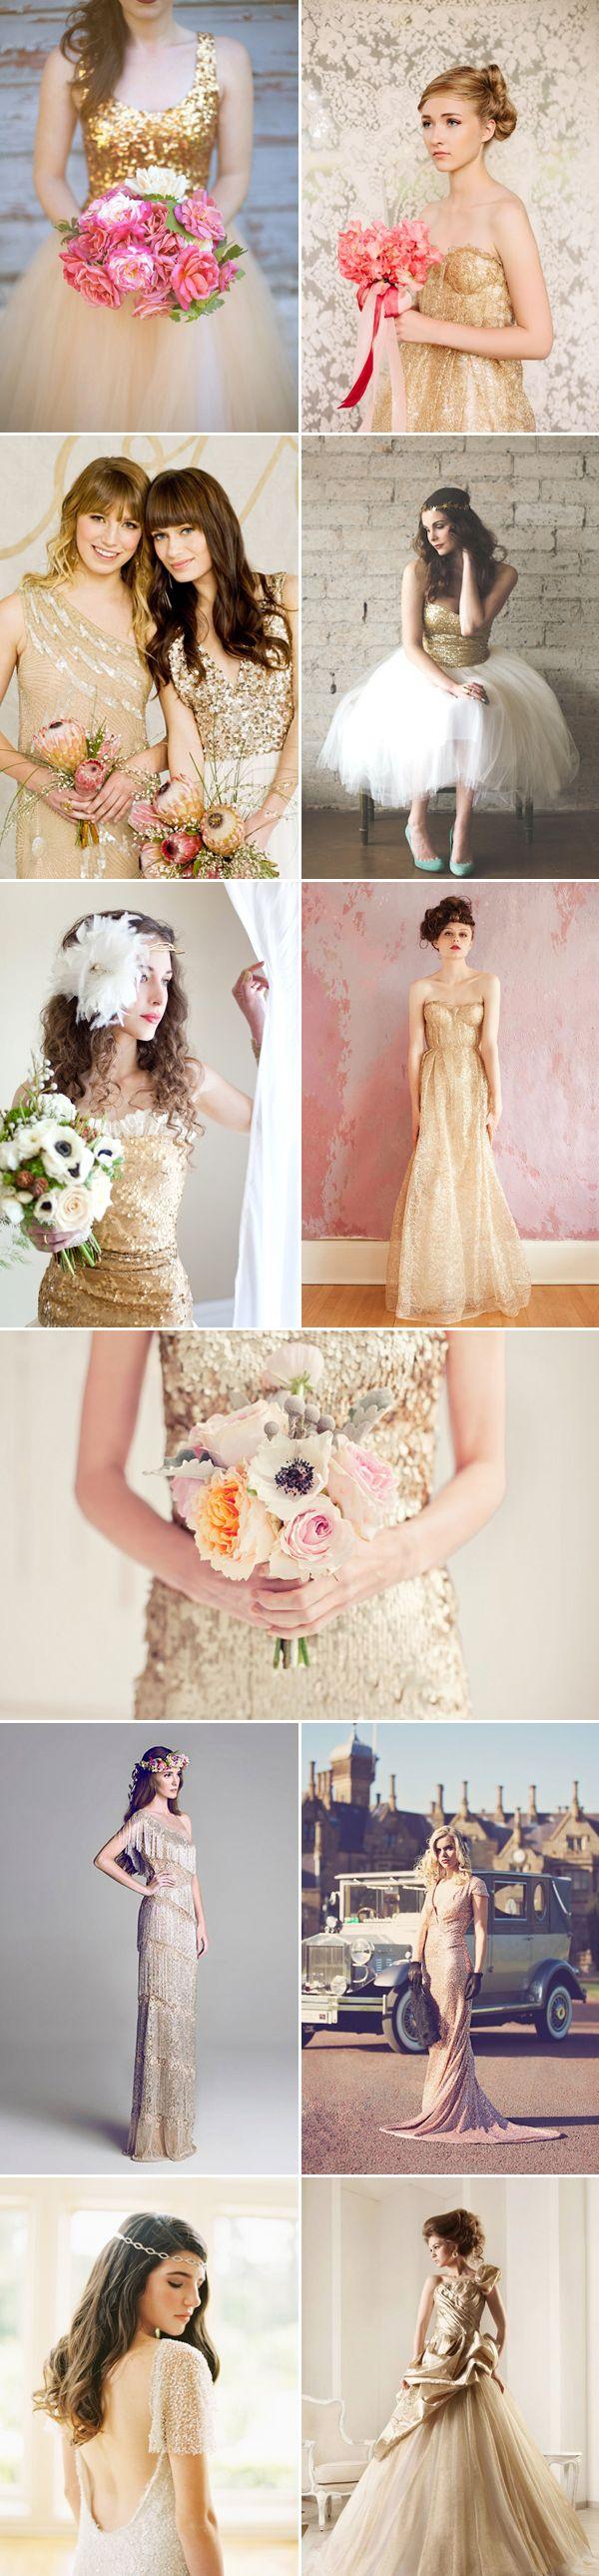 Wedding - 27 Beautiful Colored Wedding Dresses